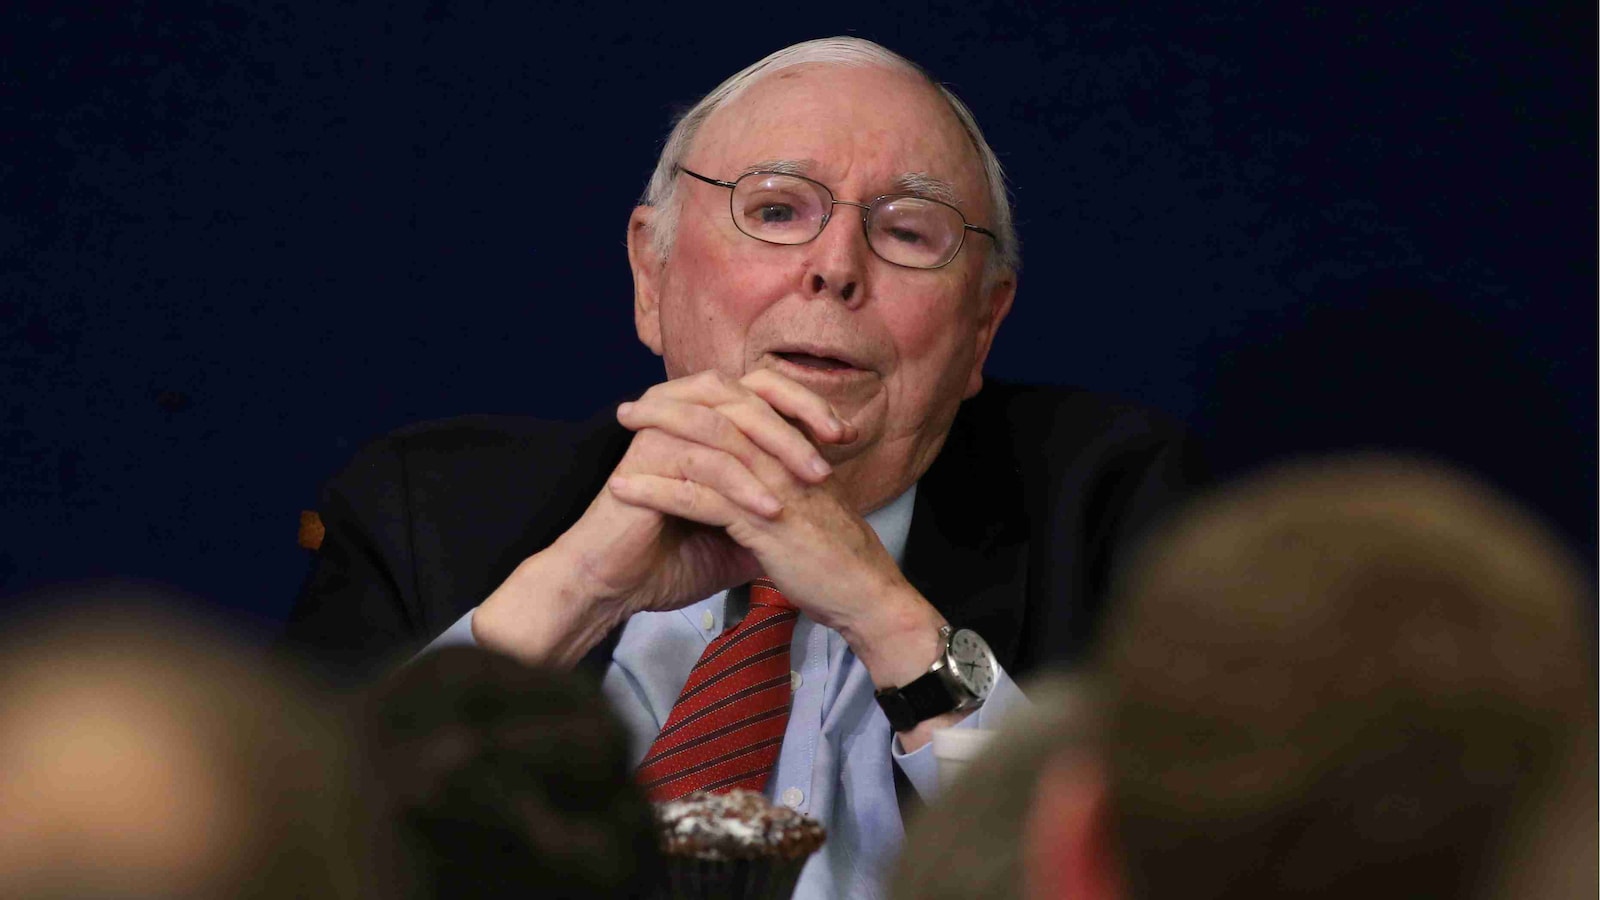 Charlie Munger, who helped Buffett build Berkshire, dies at 99